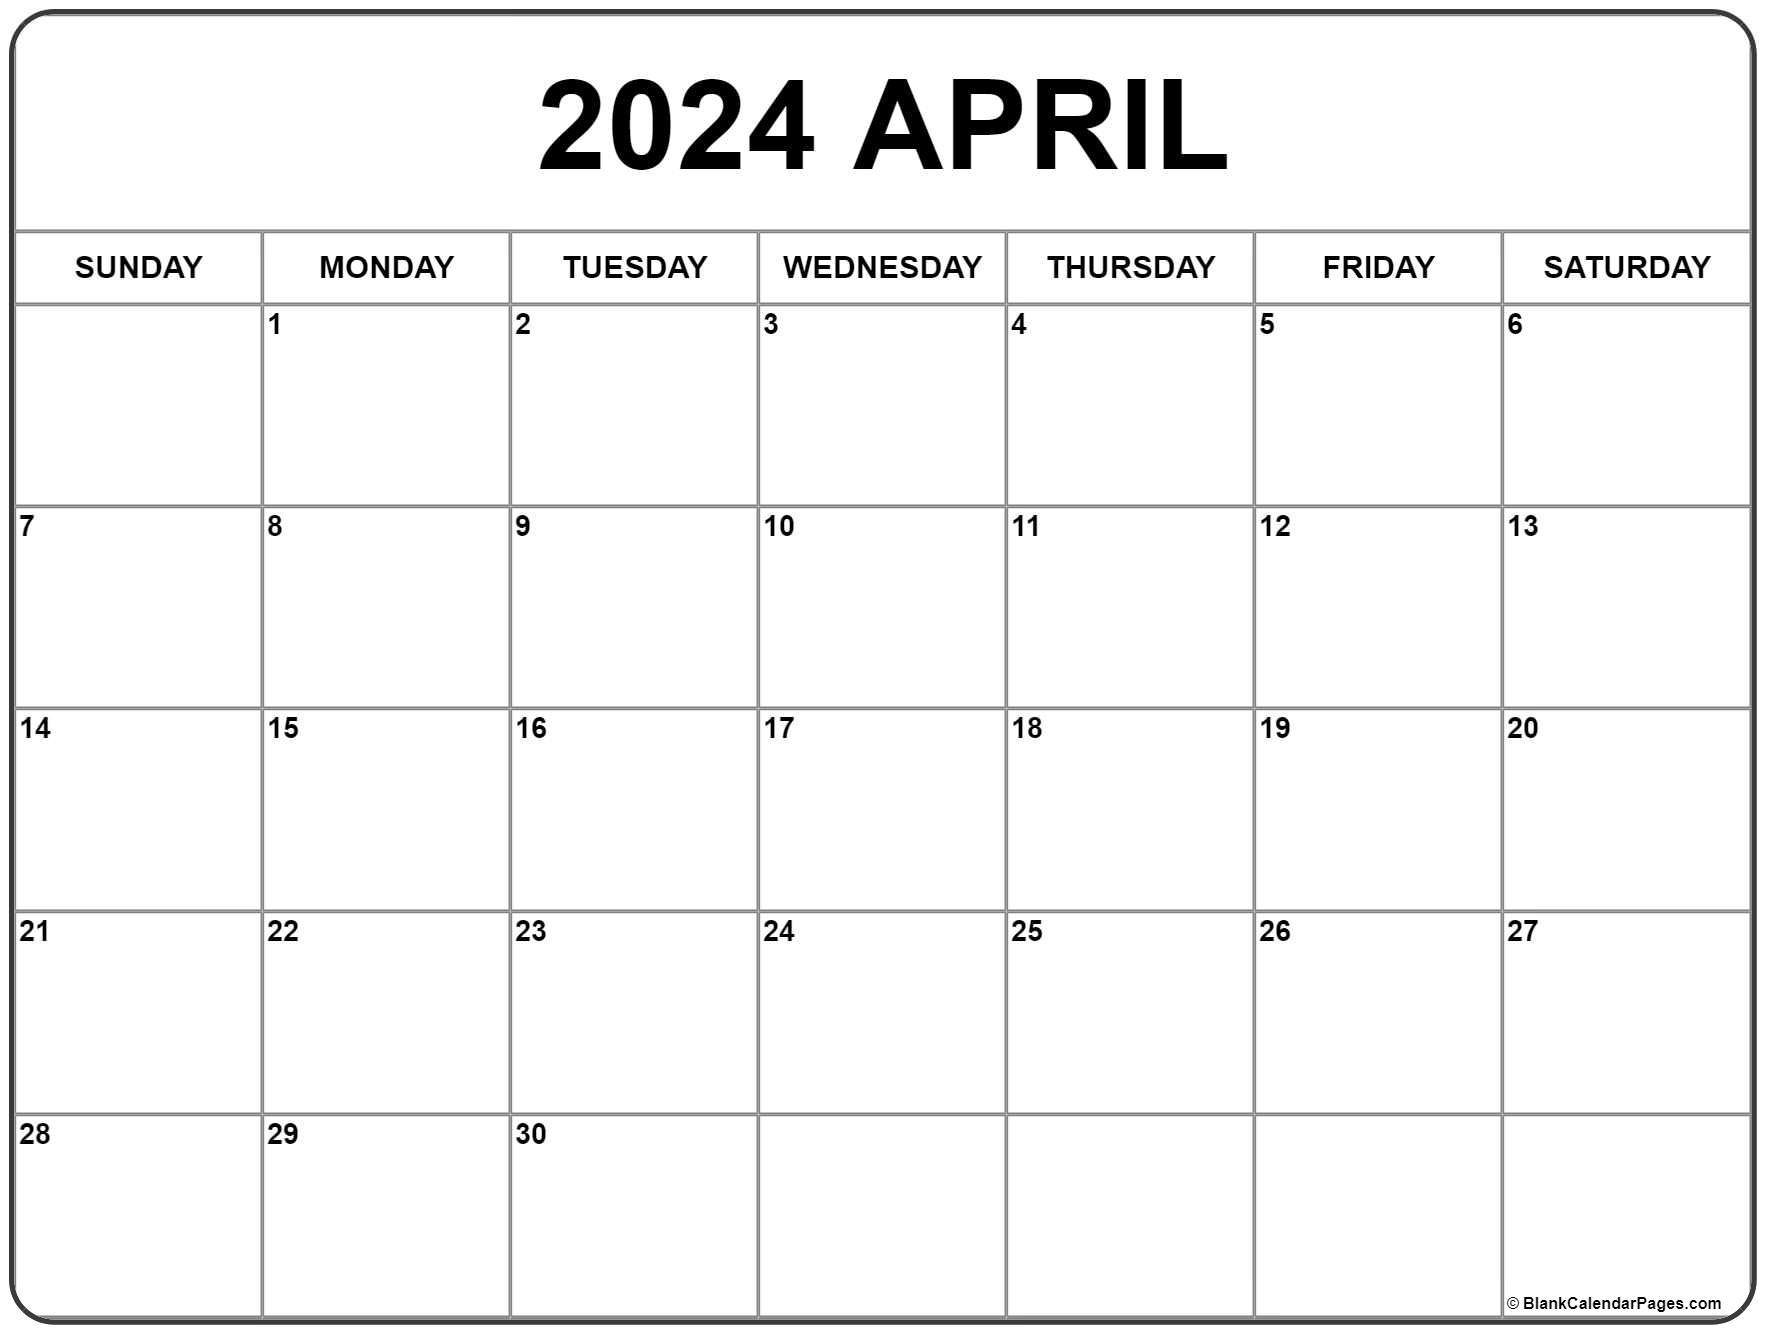 Blank April 2020 Calendar